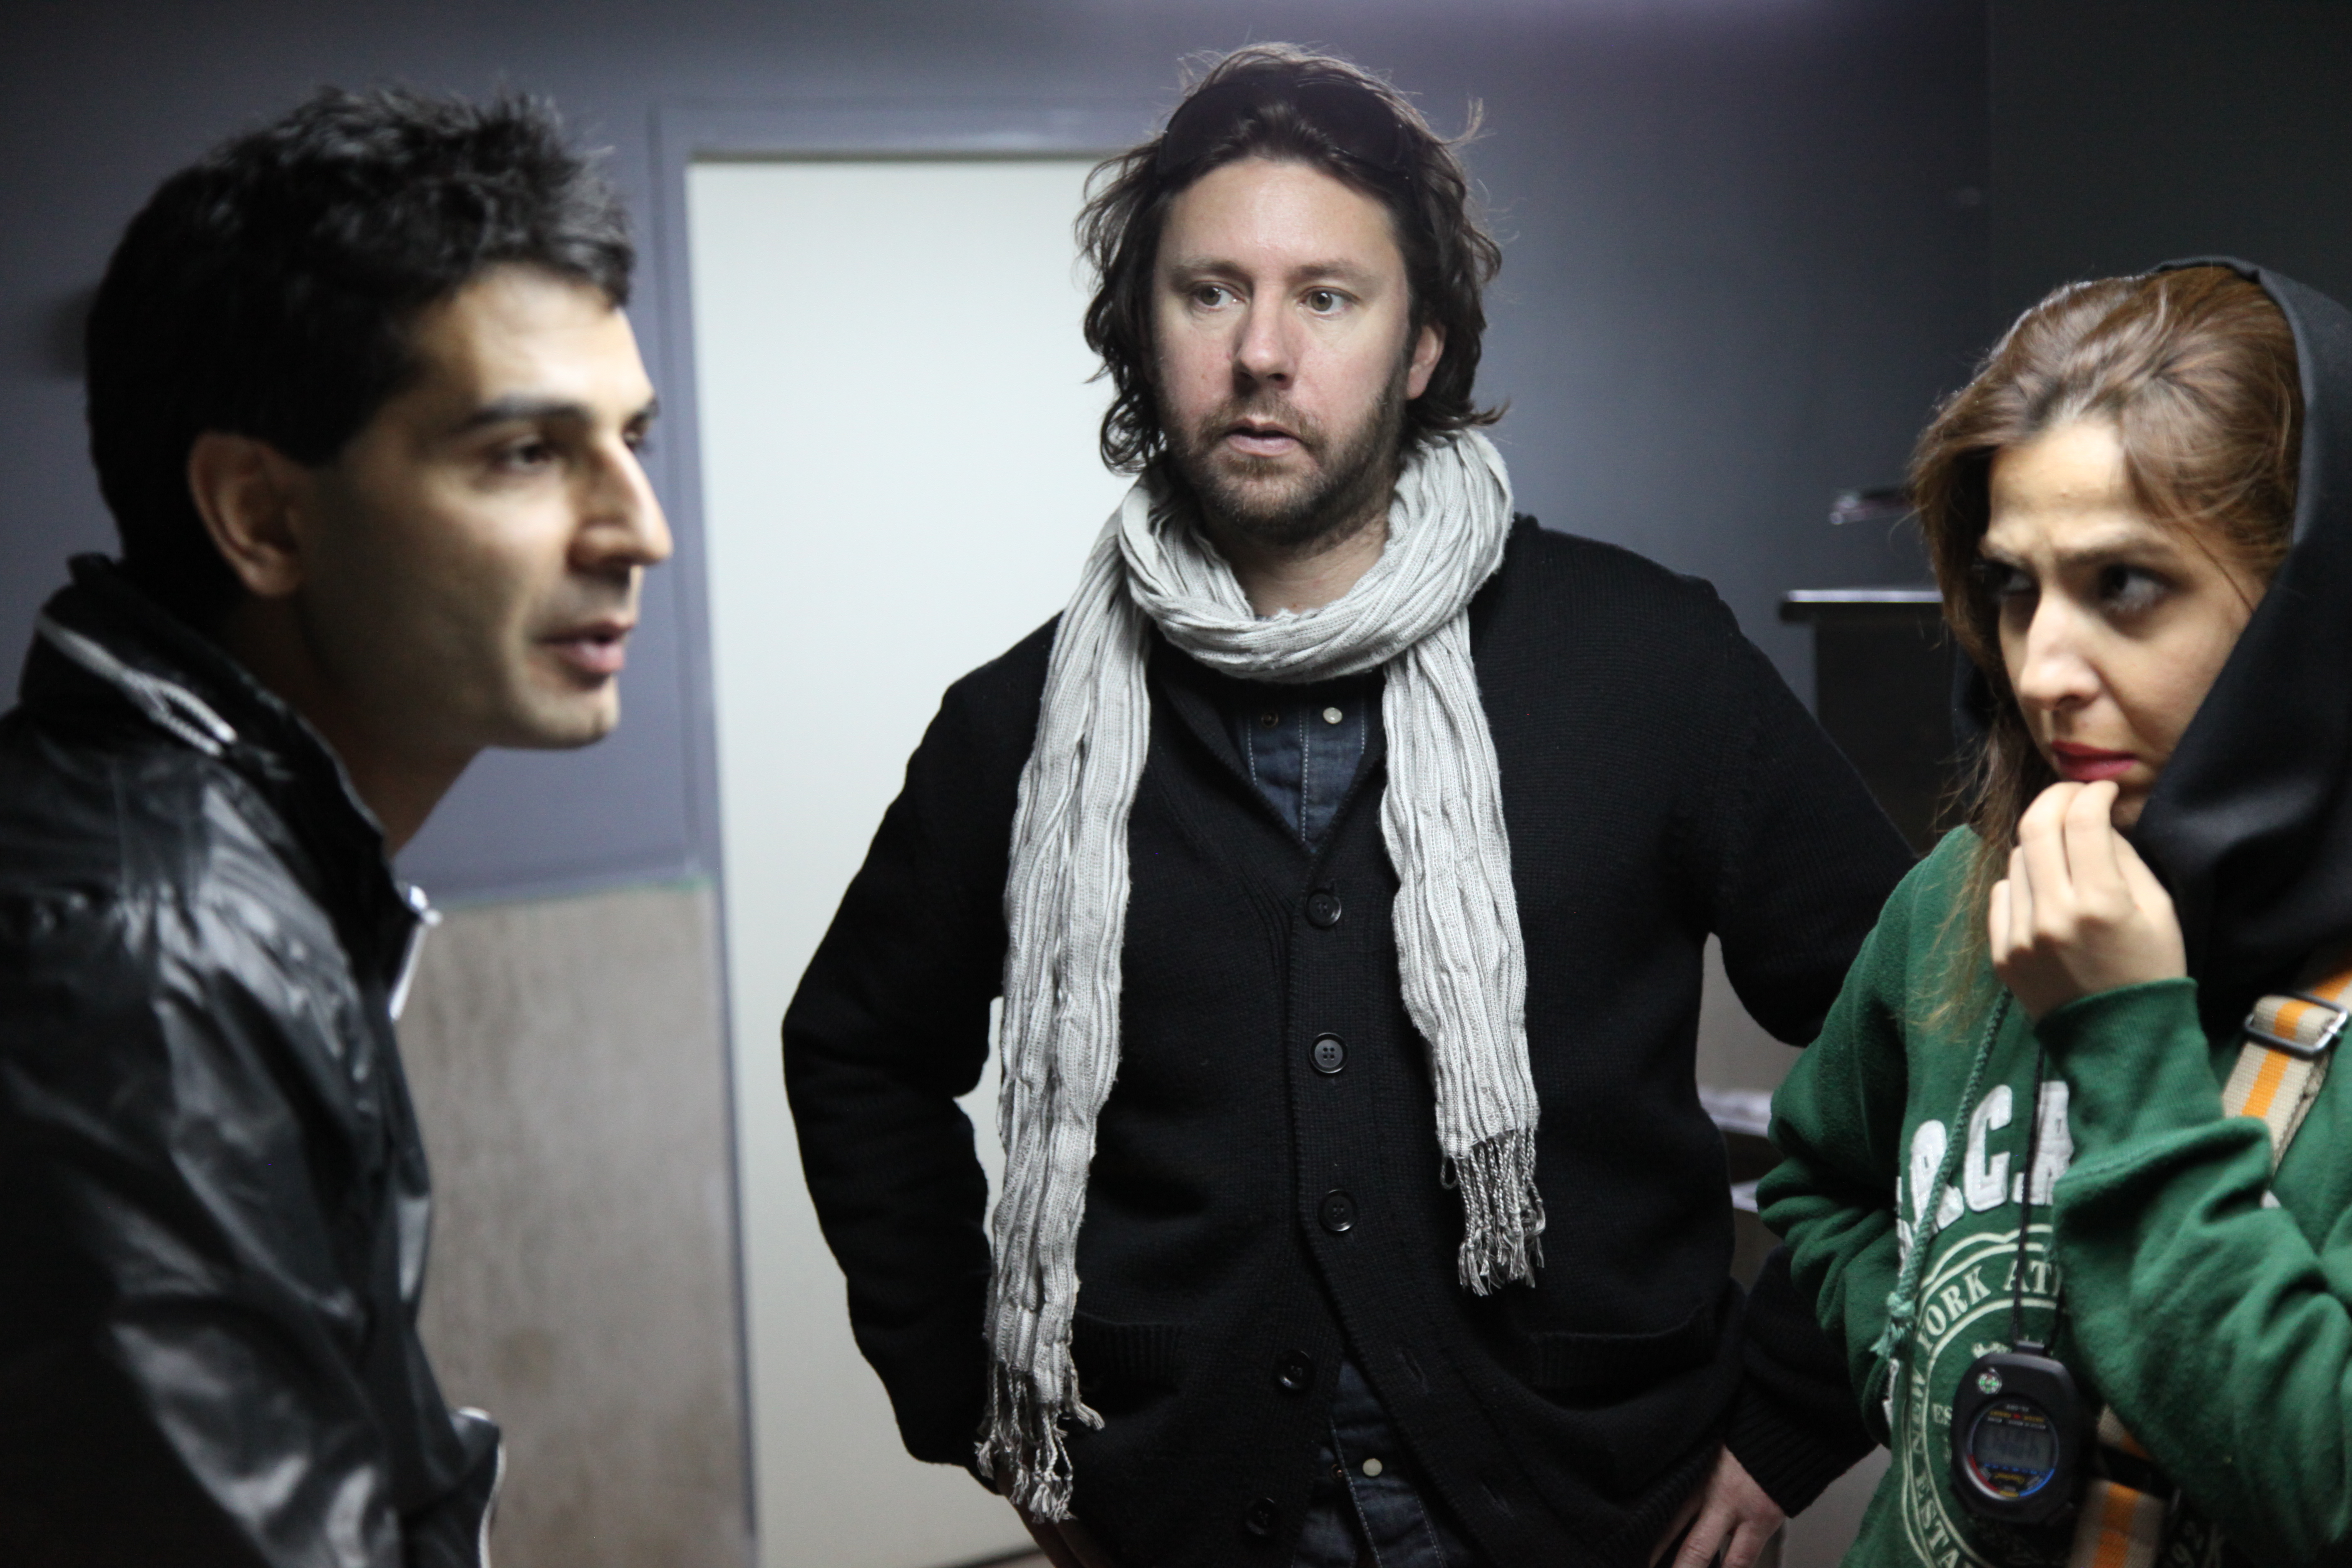 Producer 'Chris Robb', Director 'Hassan Nazer', Script Supervisor 'Sepideh Sepehrara' on location in Iran for 'Inja Iran' 2012.